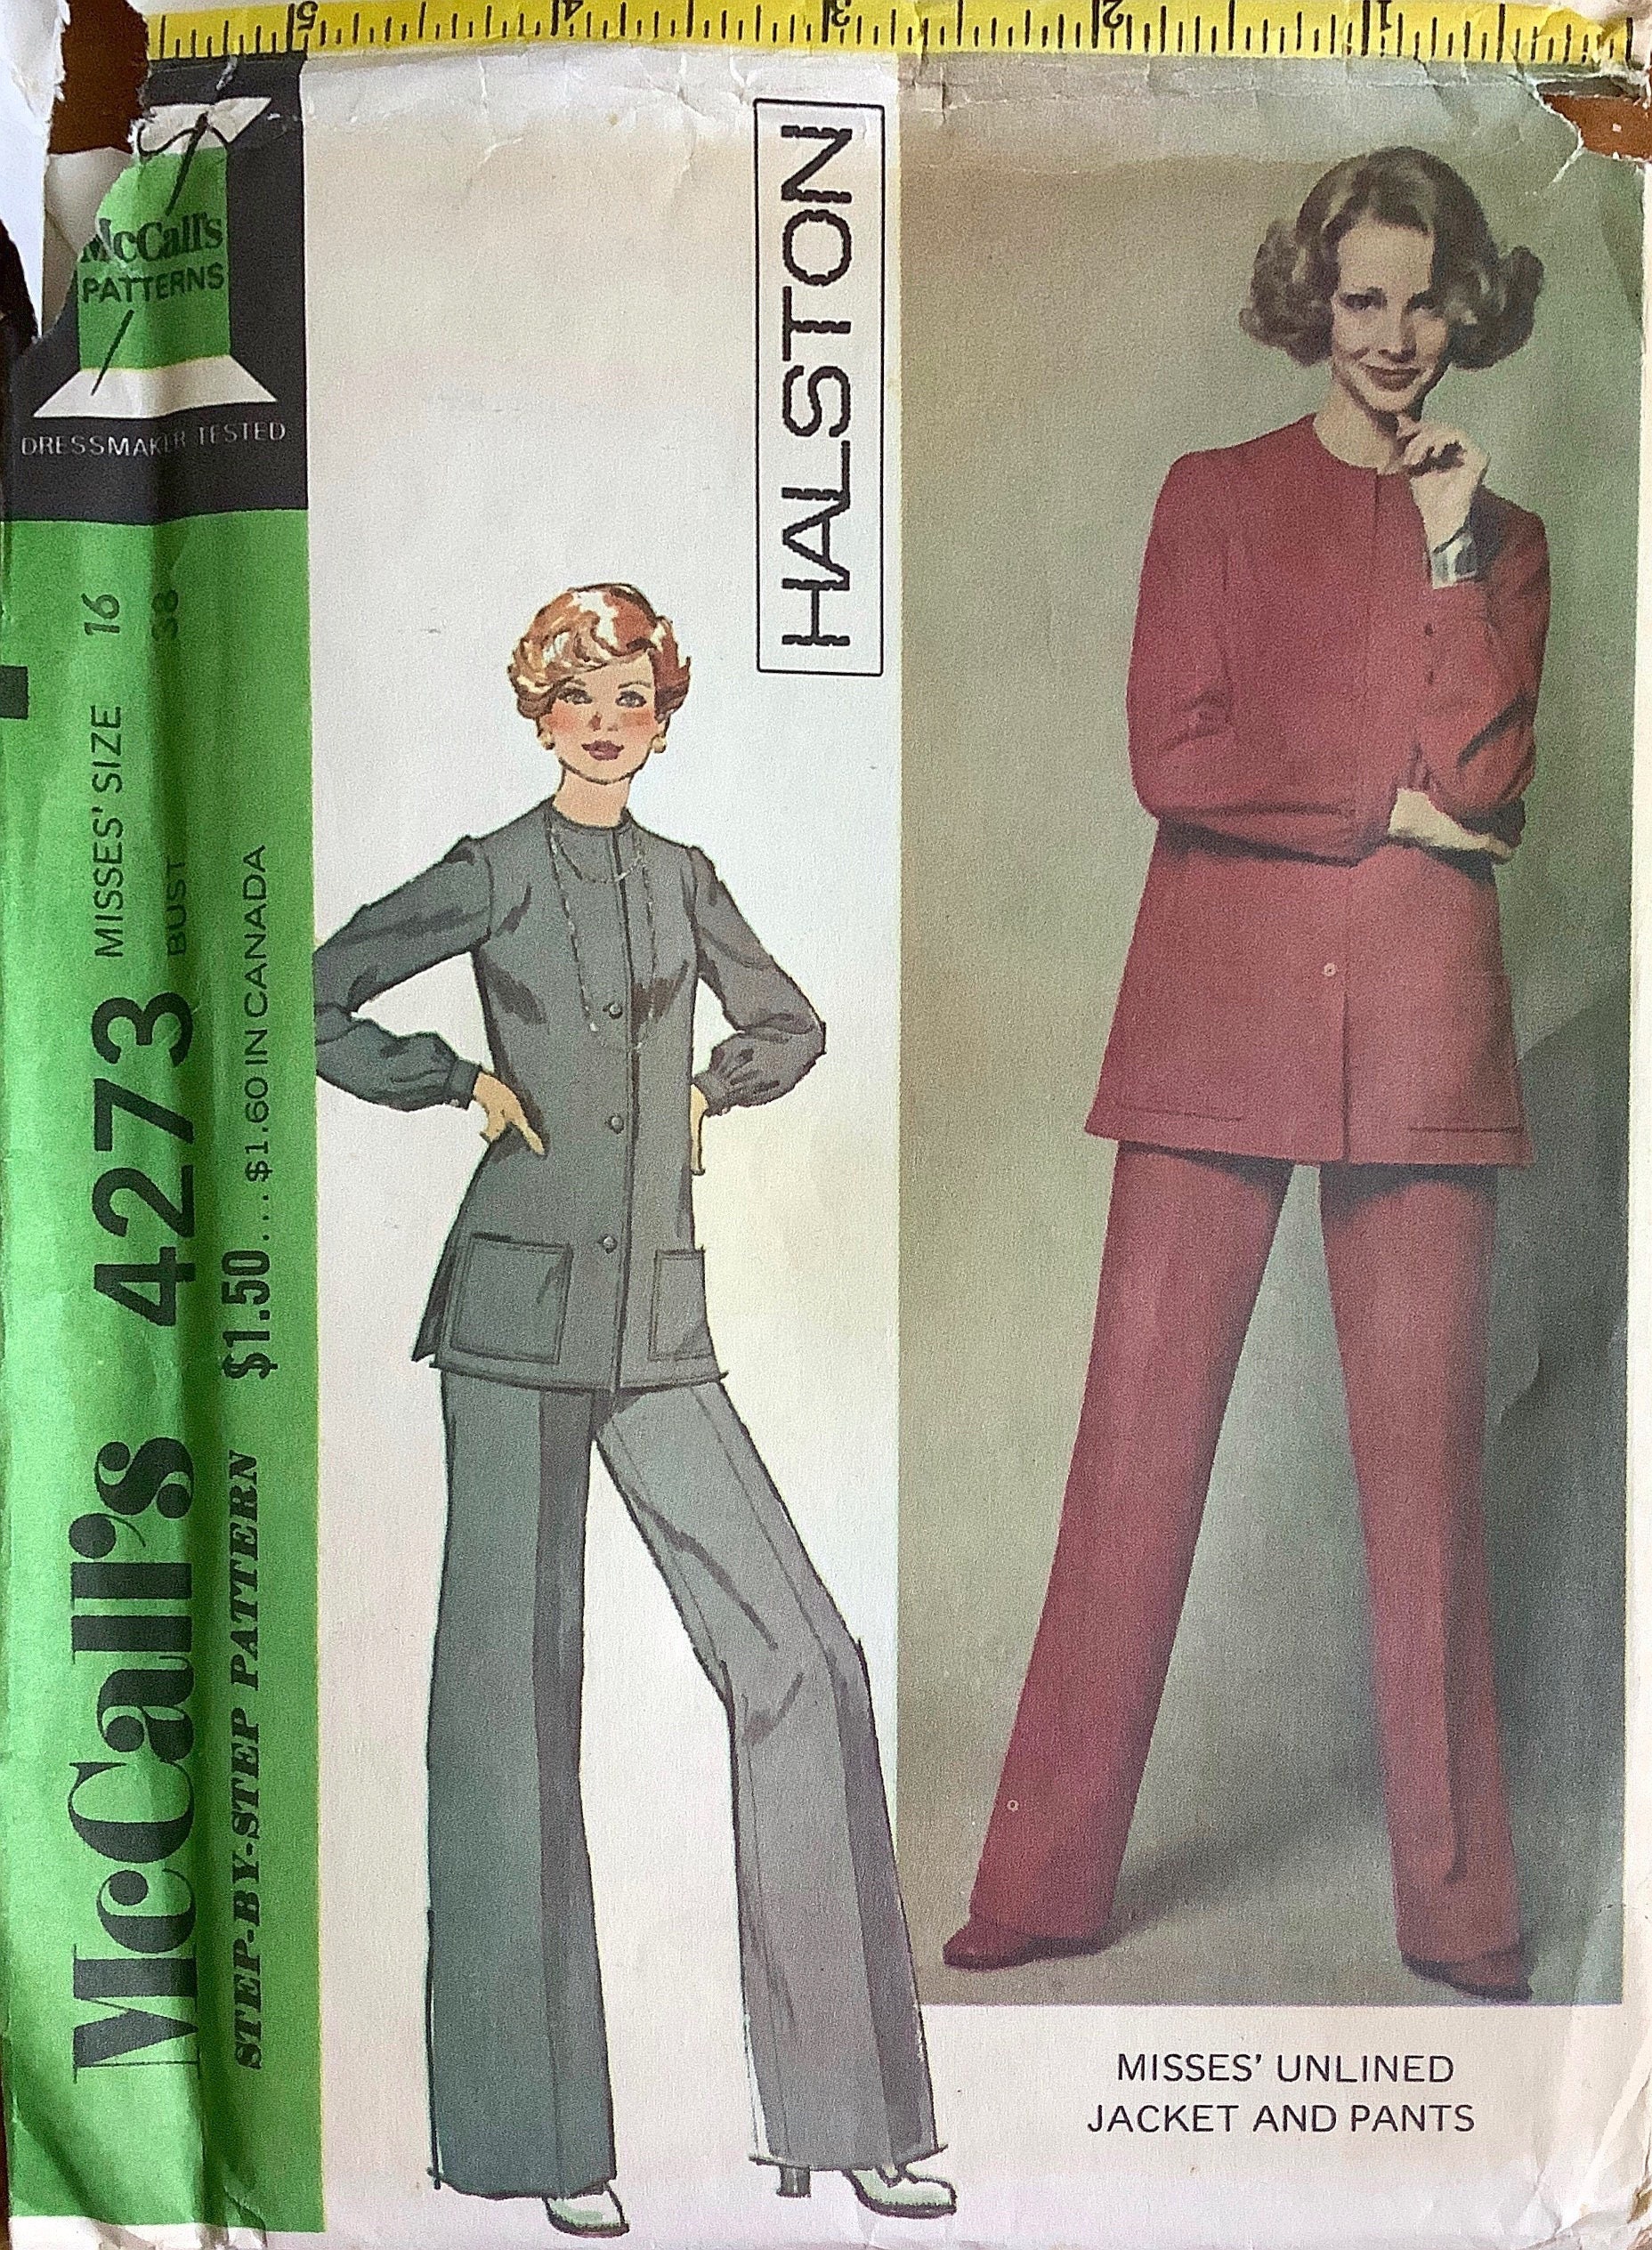 Mccalls 4273 1970s Designer Halston Misses Jacket and Pants